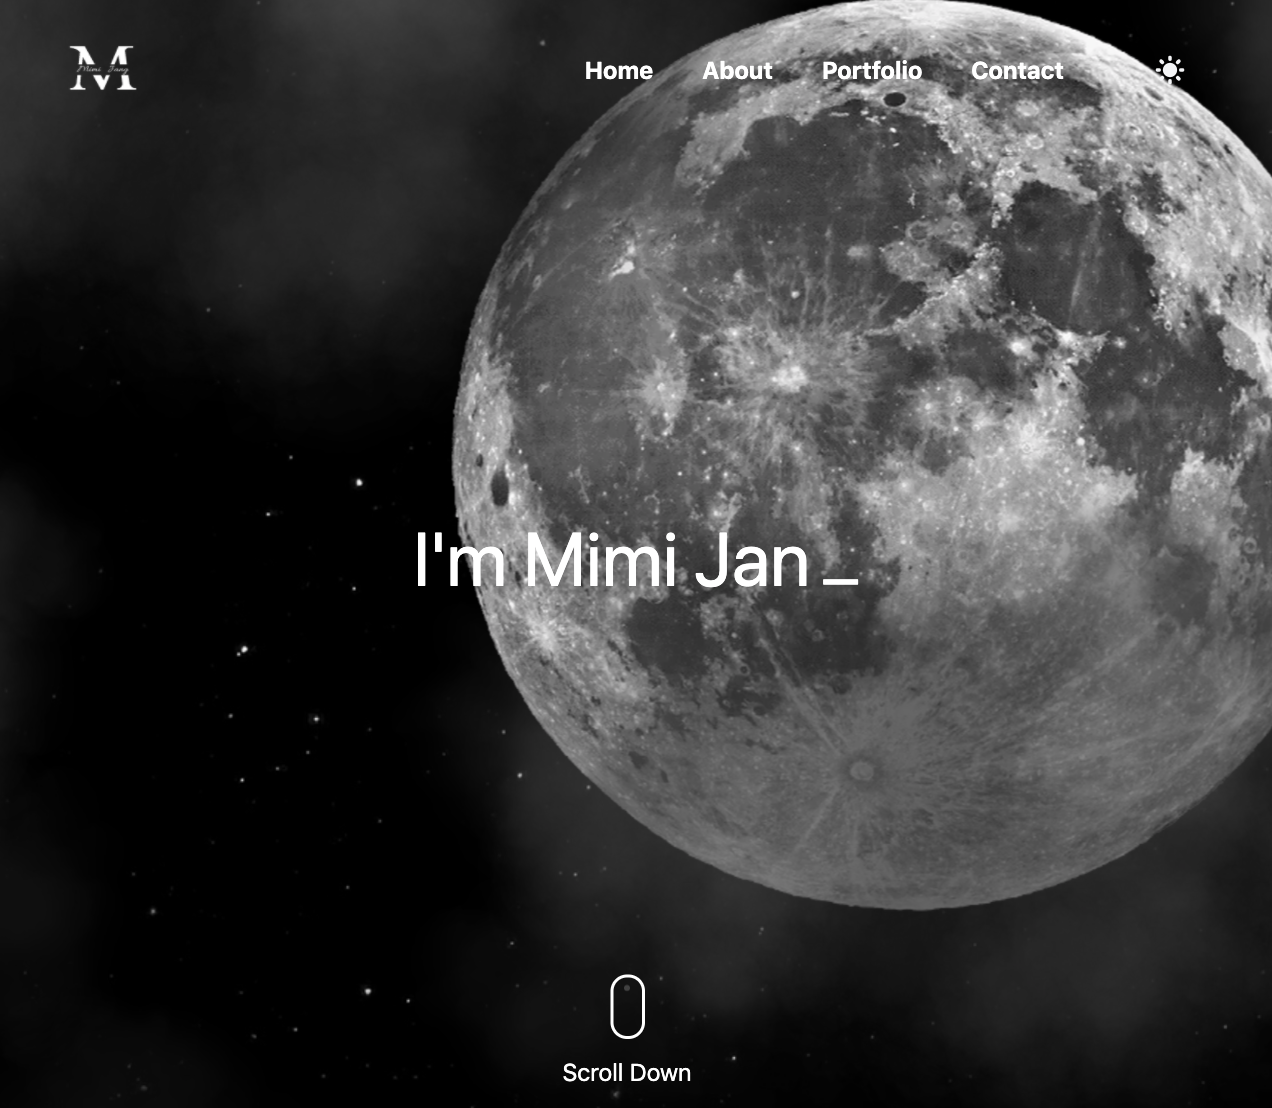 Mimi Jang's website